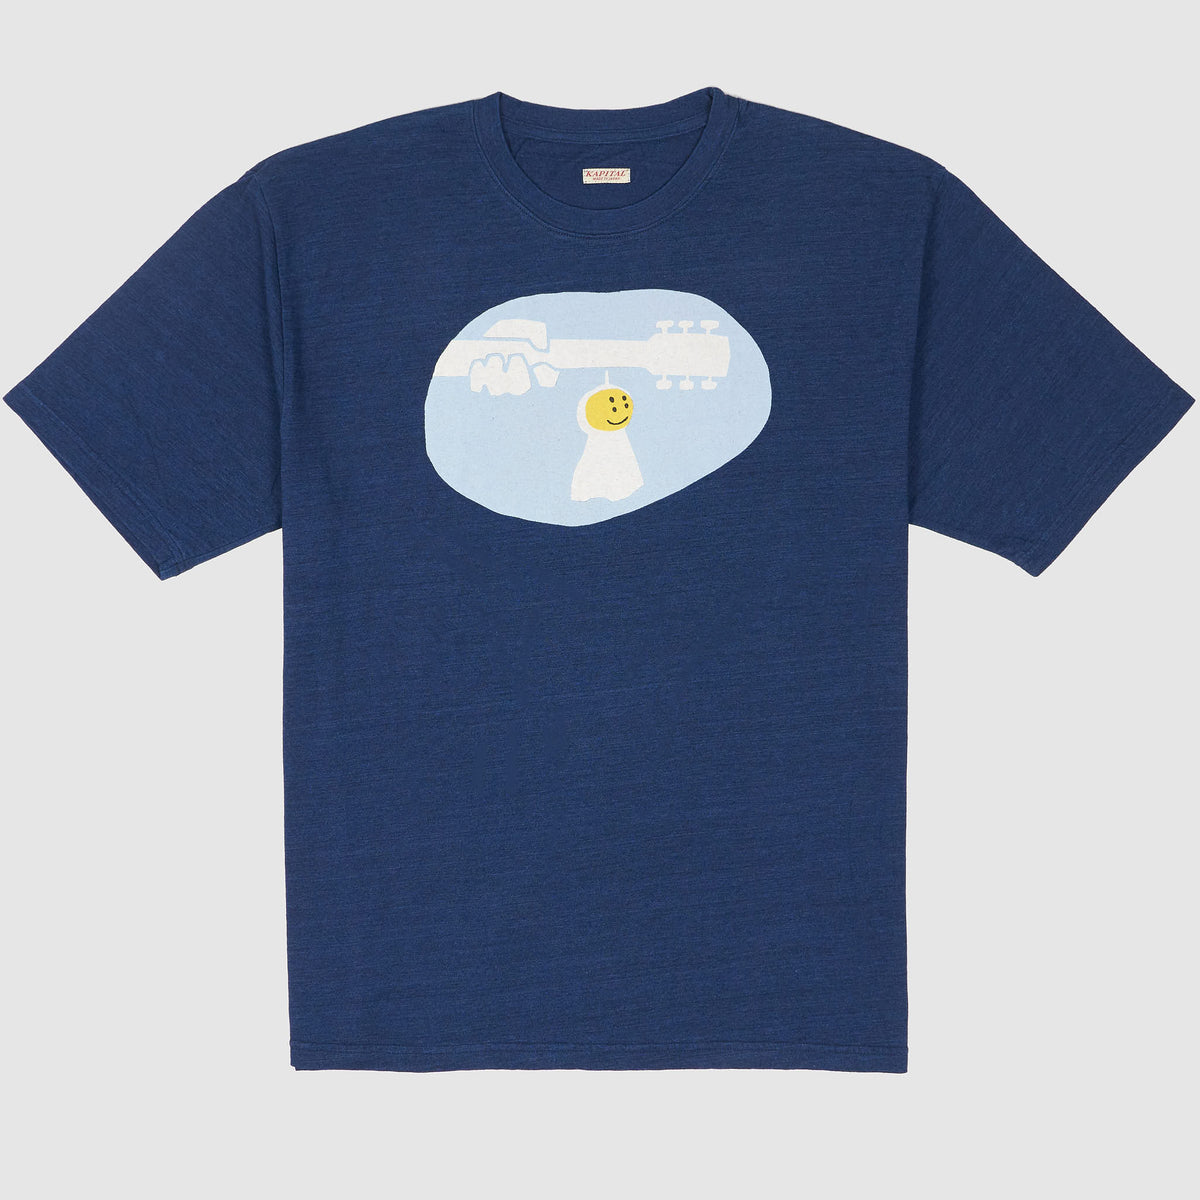 Kapital Short Sleeve Crew Neck Teru Teru Woodstock Smiley T-Shirt